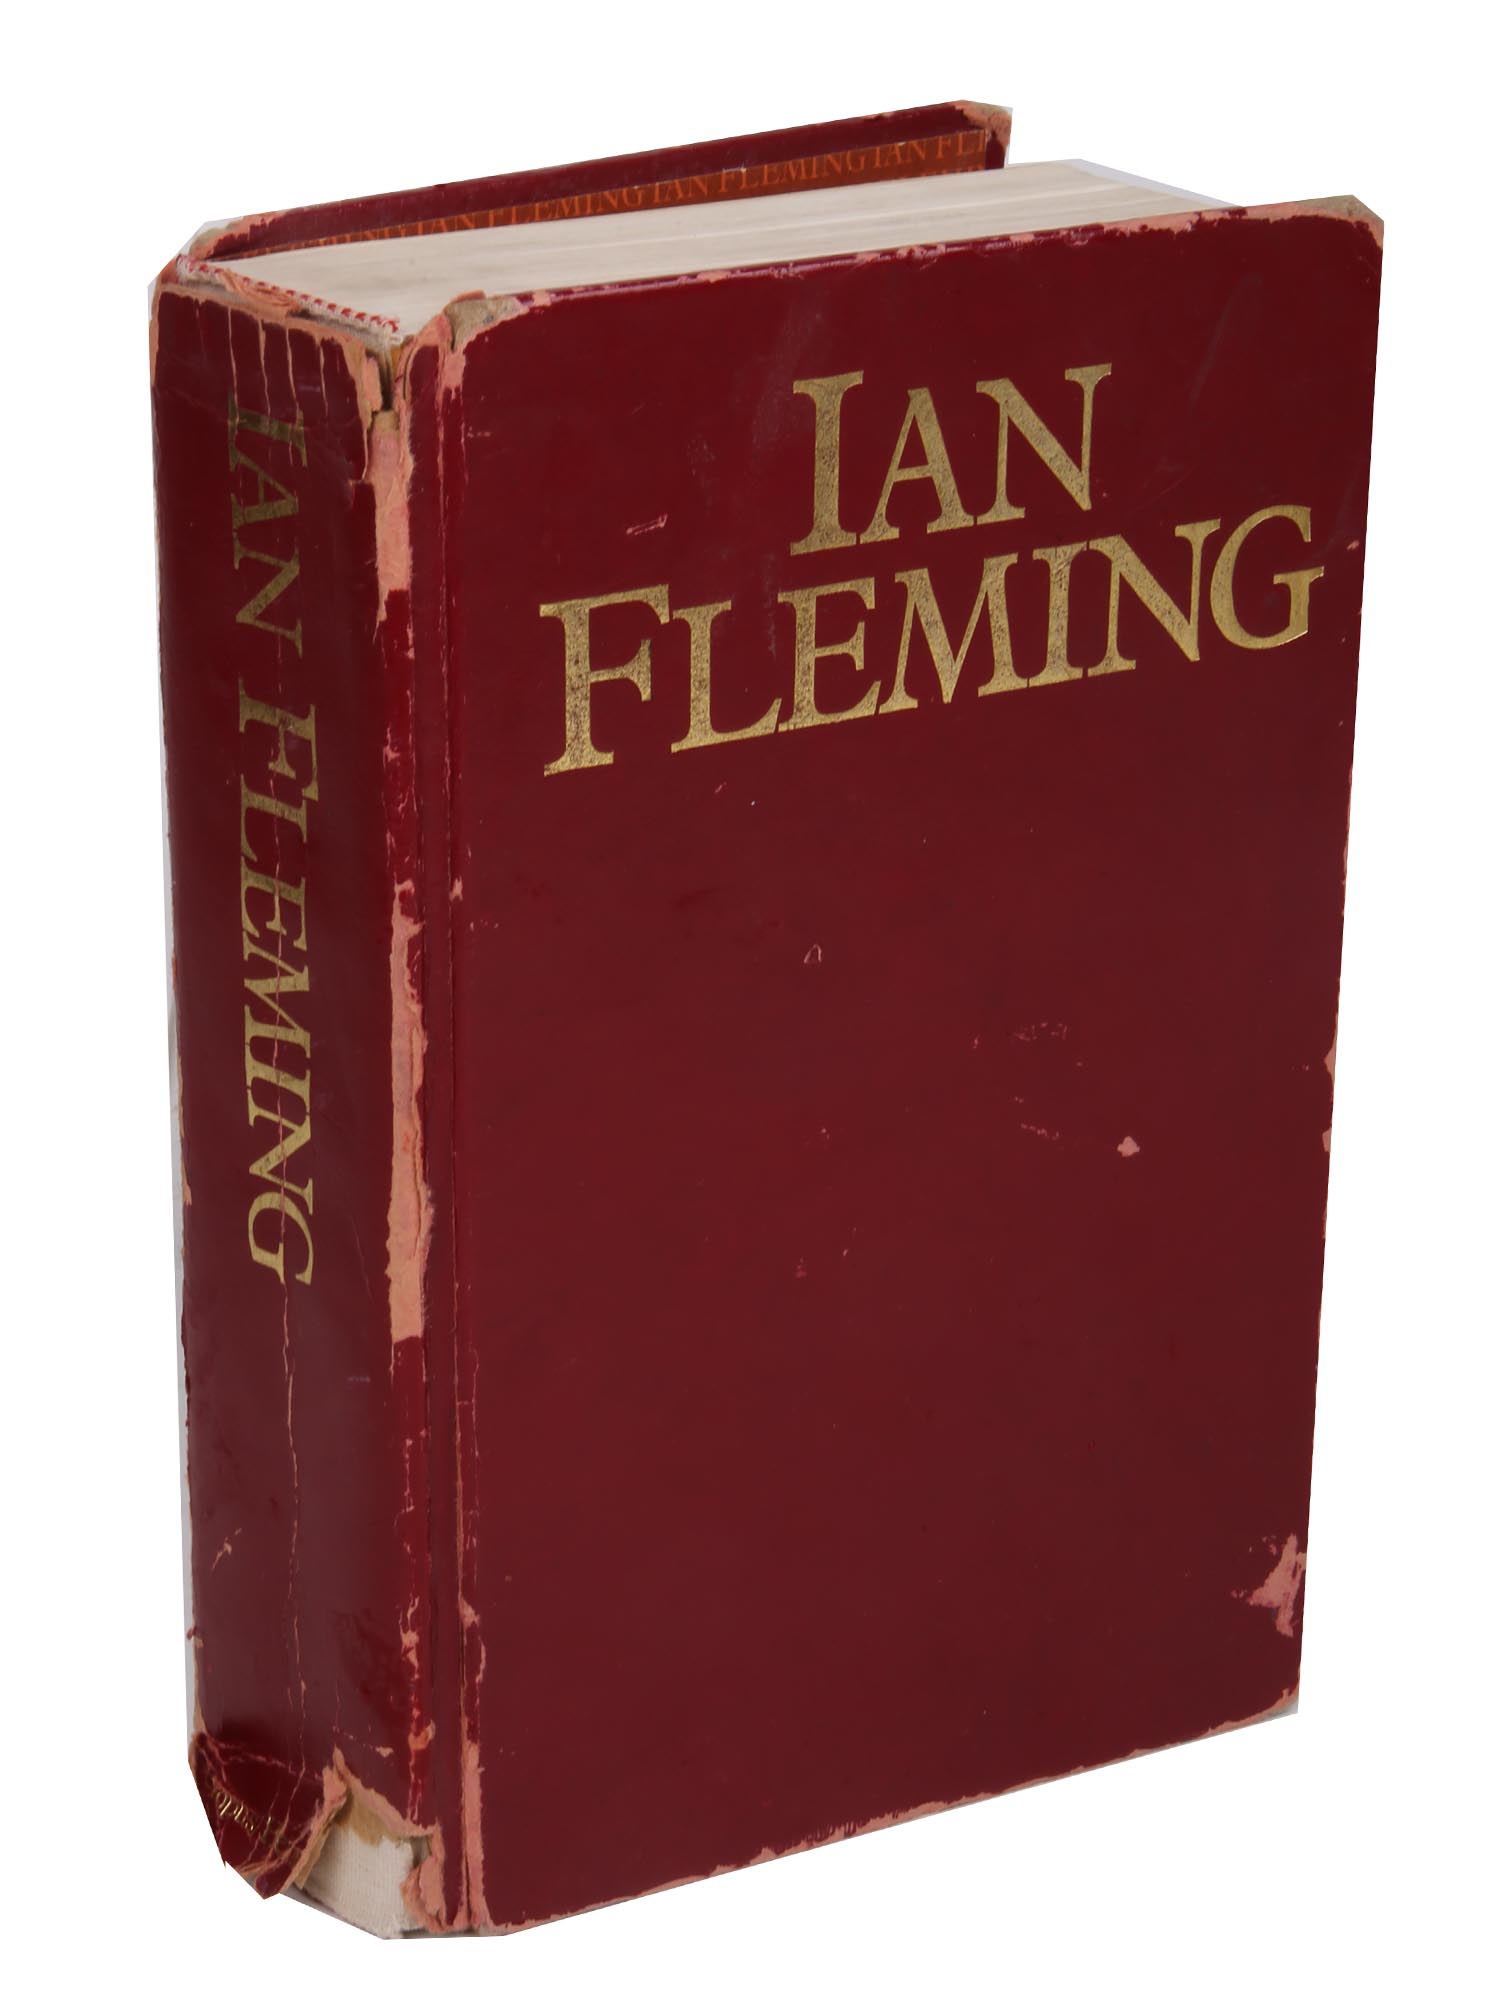 VINTAGE JAMES BOND BOOK BY IAN FLEMING